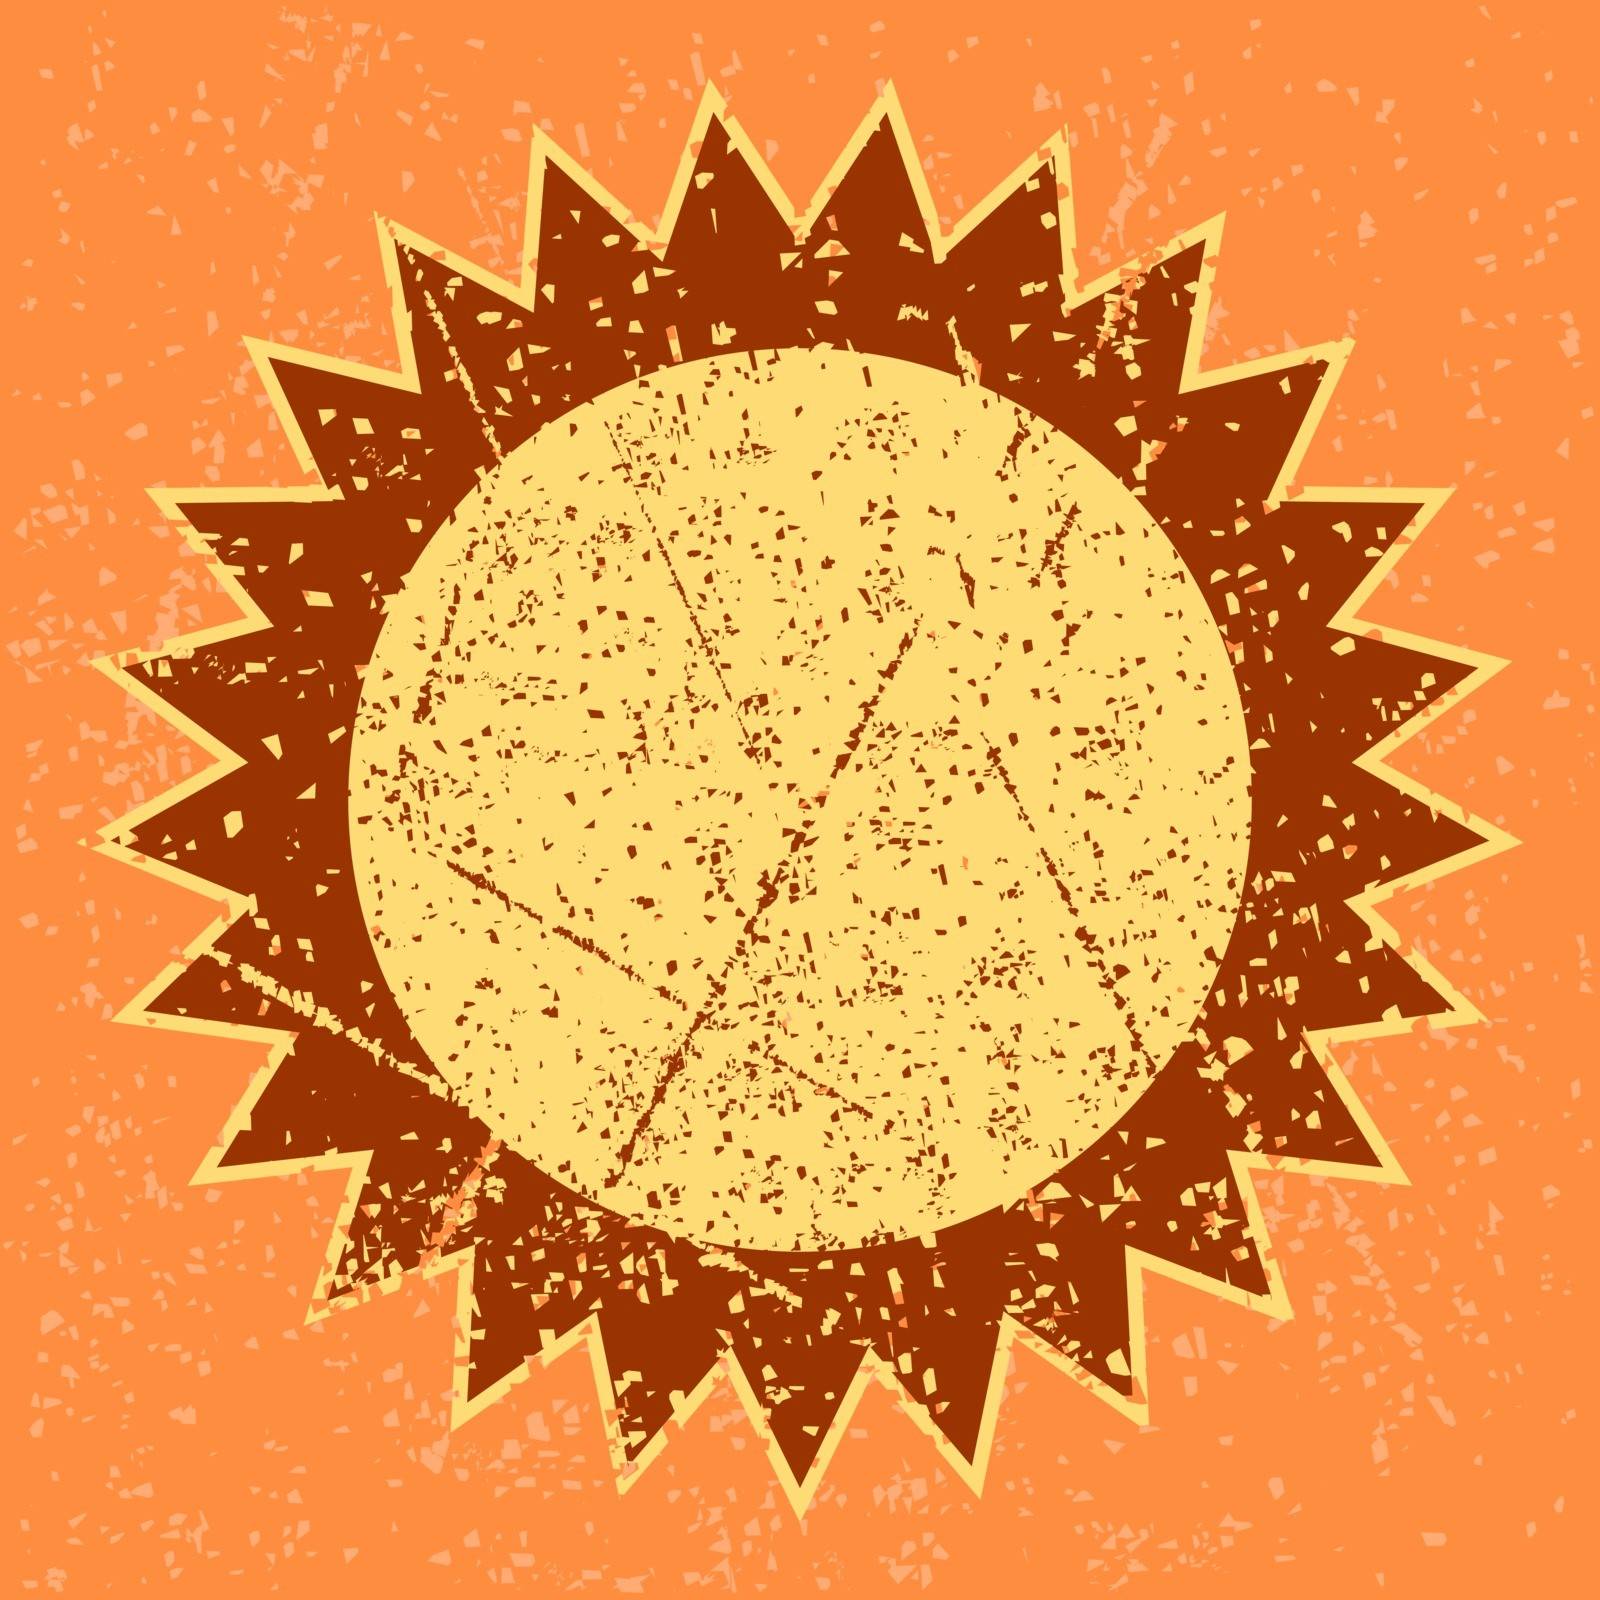 sun image with grunge pattern on orange background